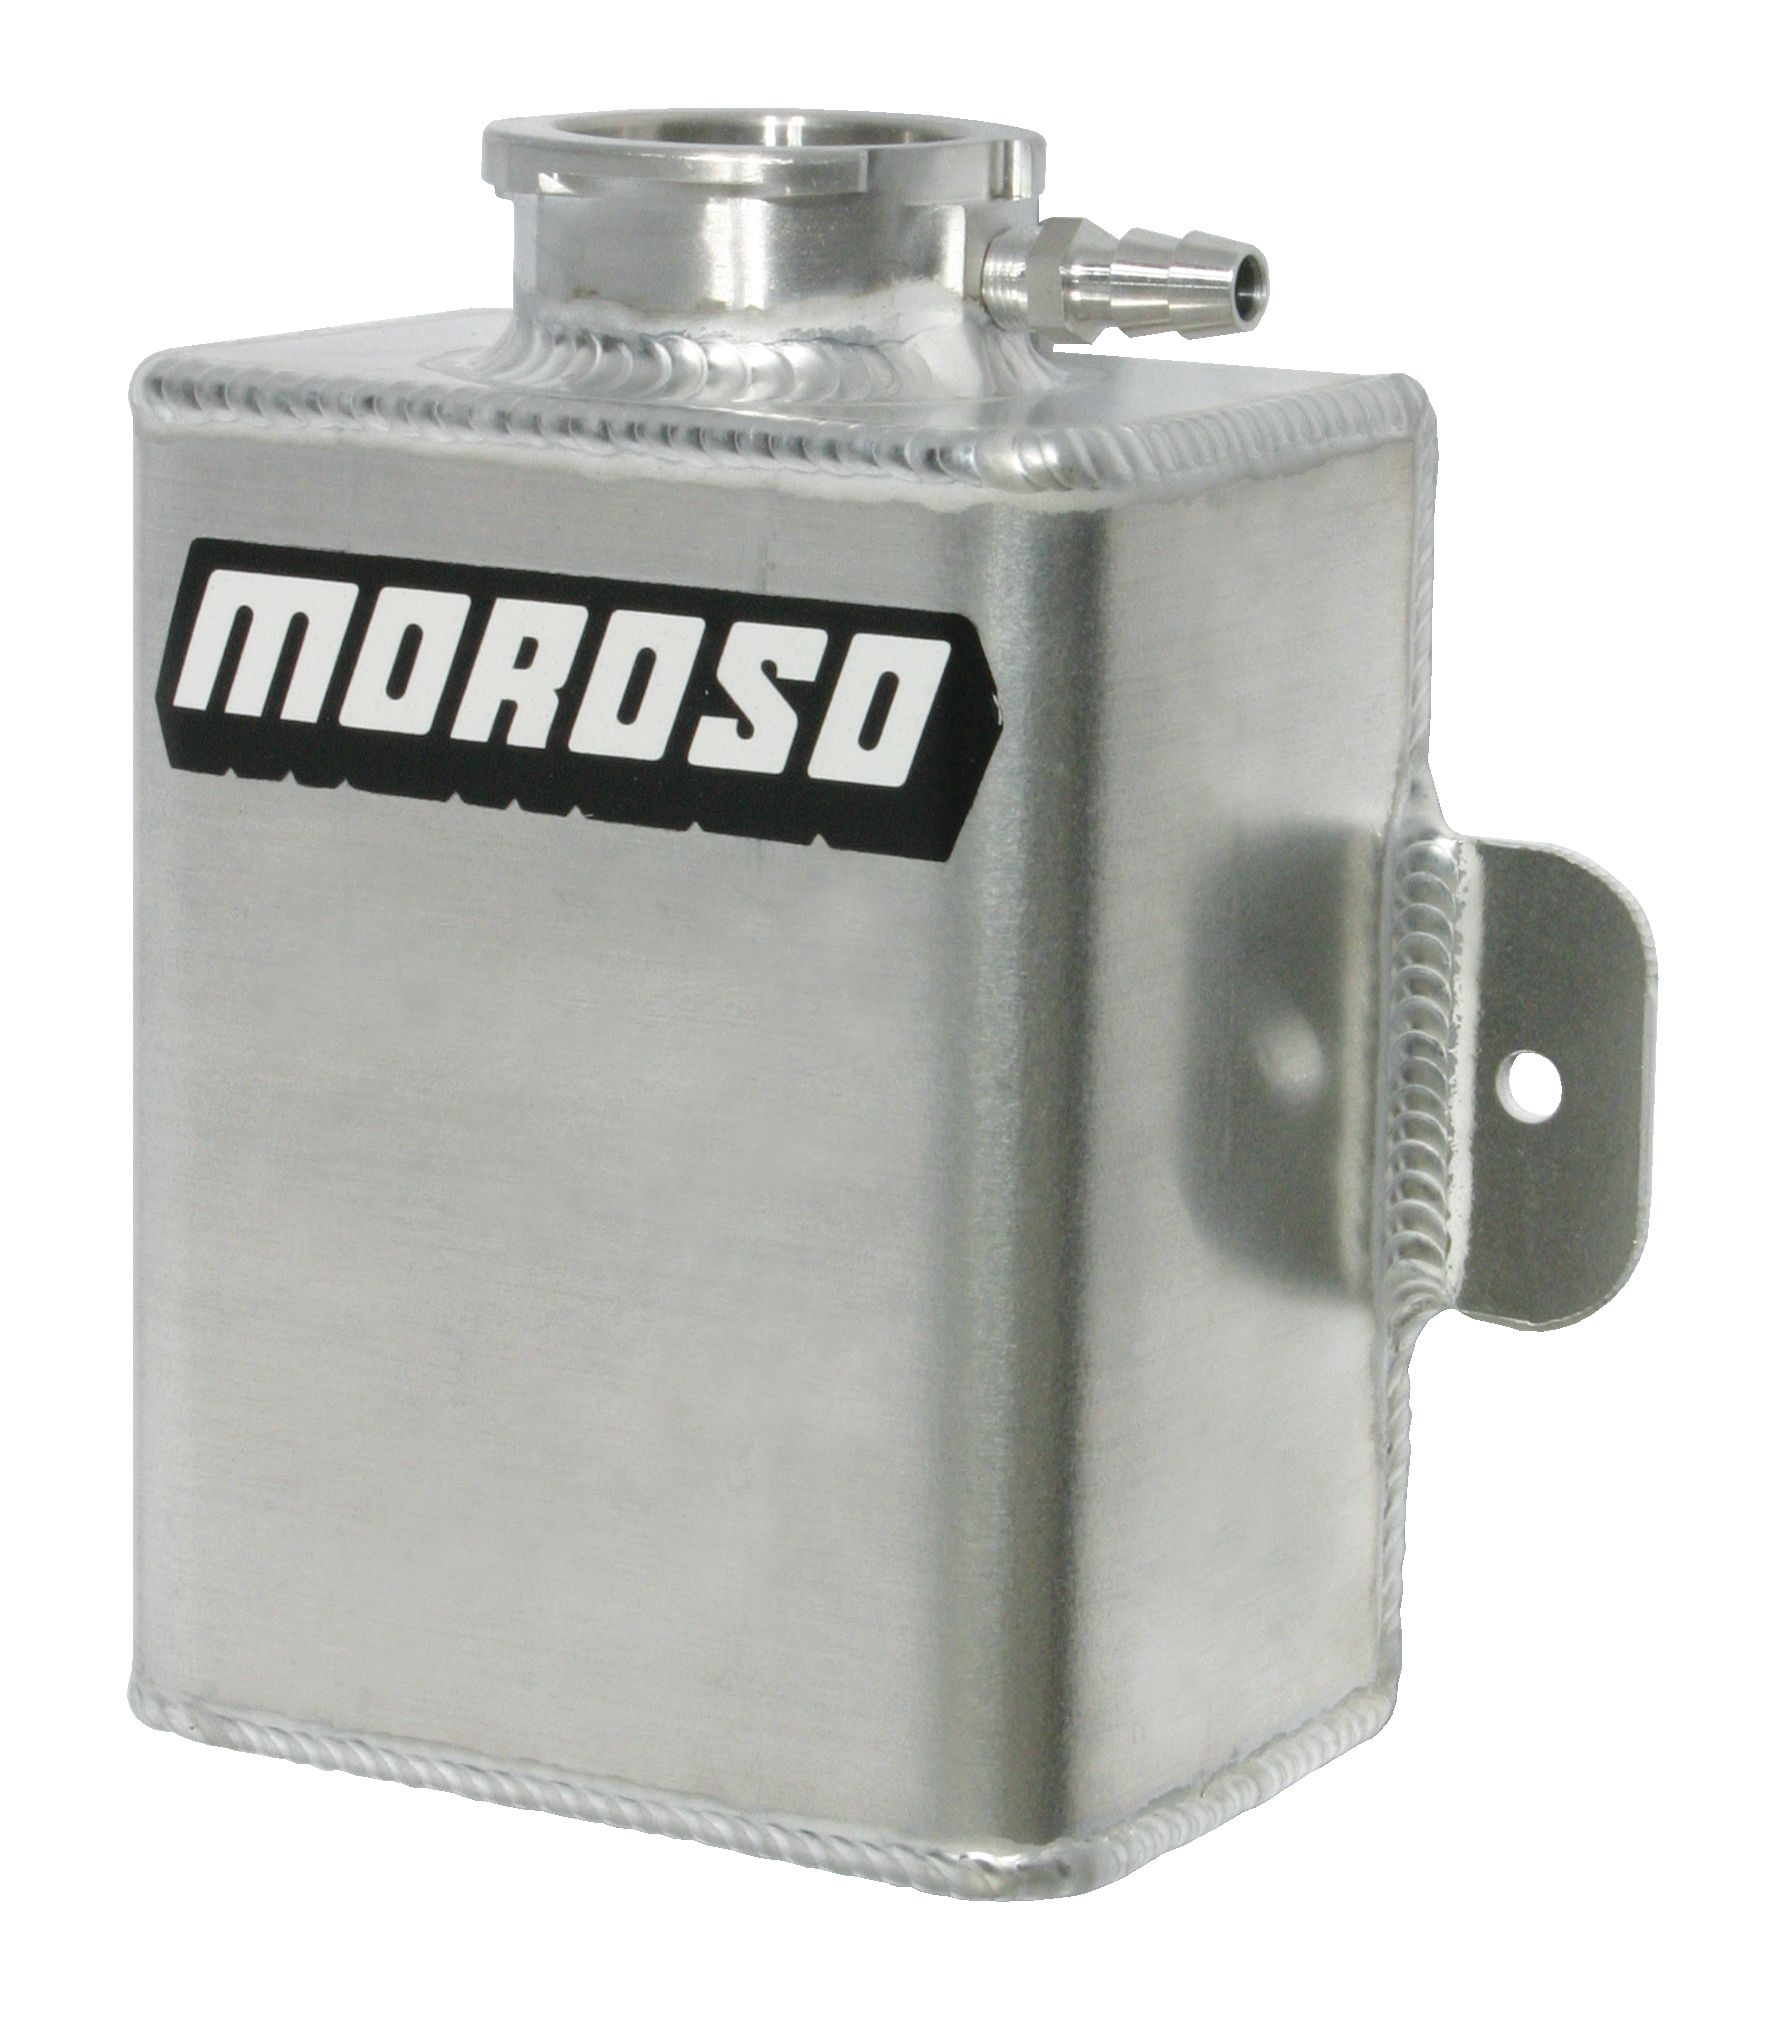 Moroso 63766 Universal Expansion Tank, Silver